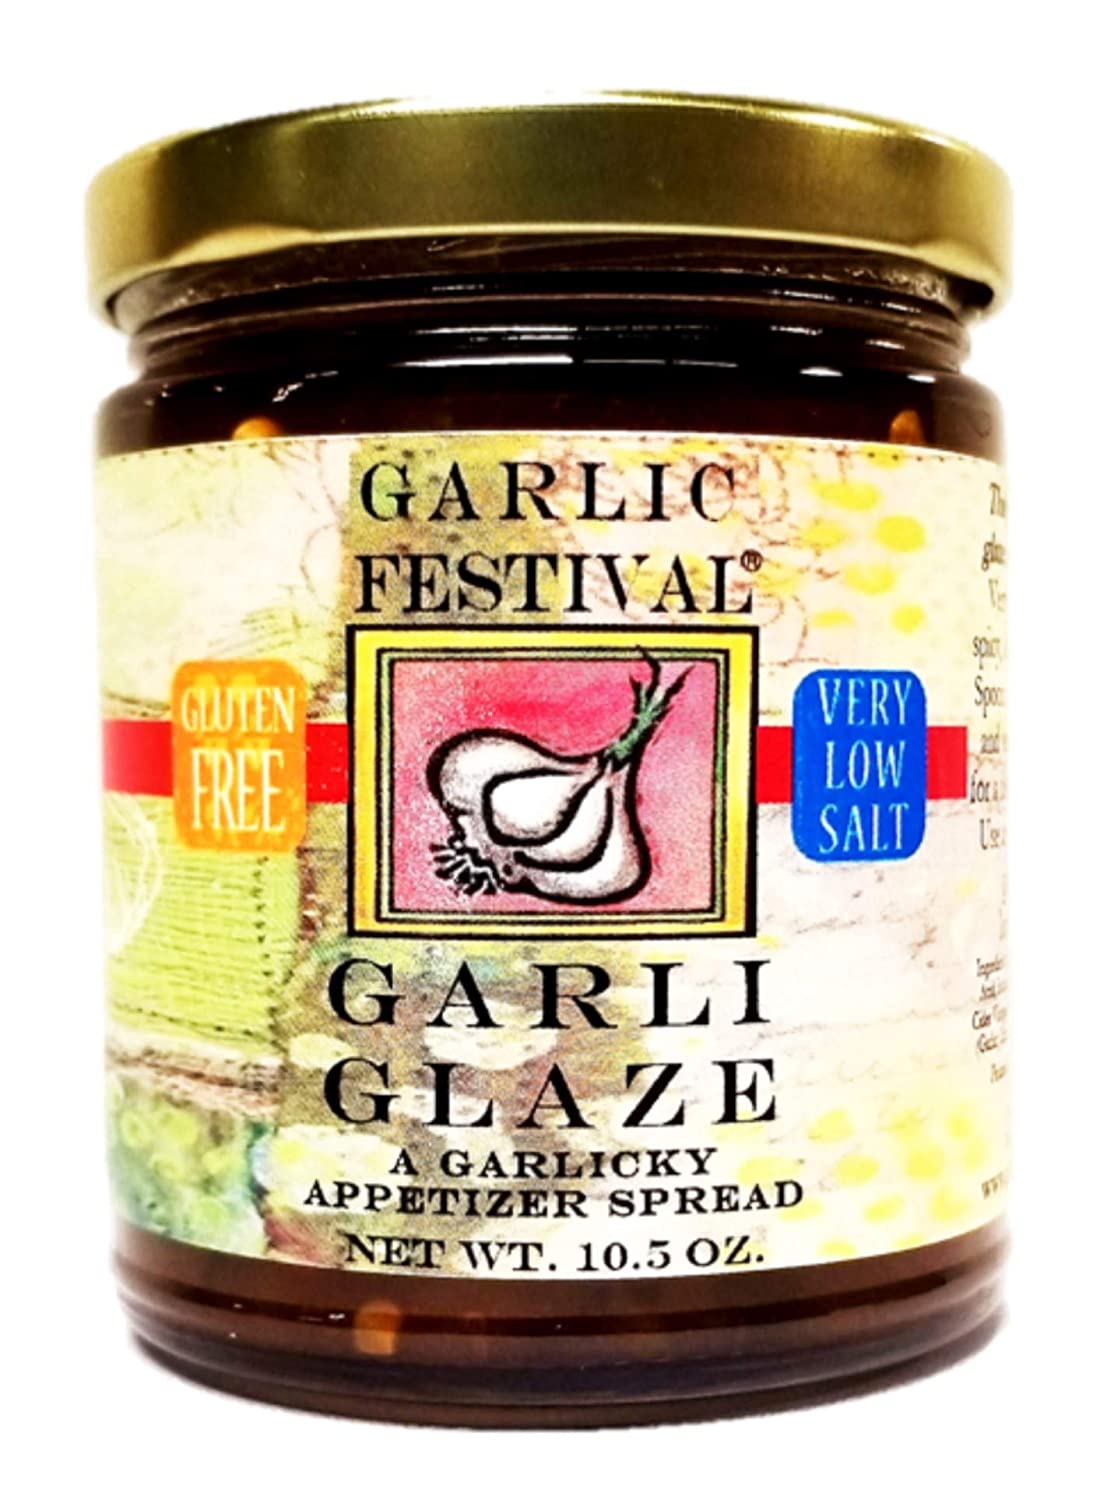 Jelly Garli Glaze  10.5 oz Garlic Festival Foods $8.98